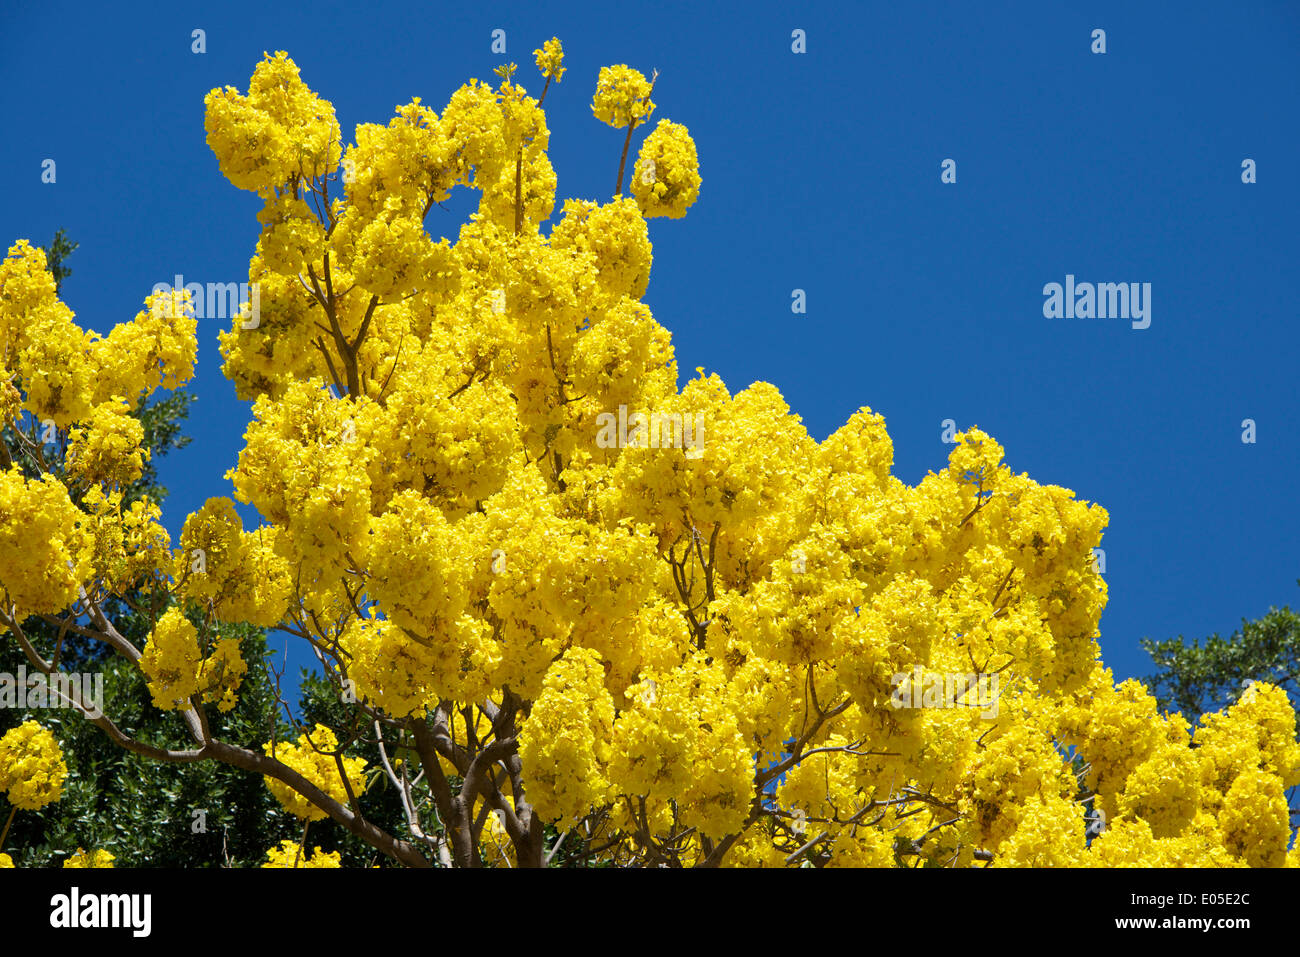 Superb yellow blossom tree against blue sky Oaxaca City Mexico Stock Photo